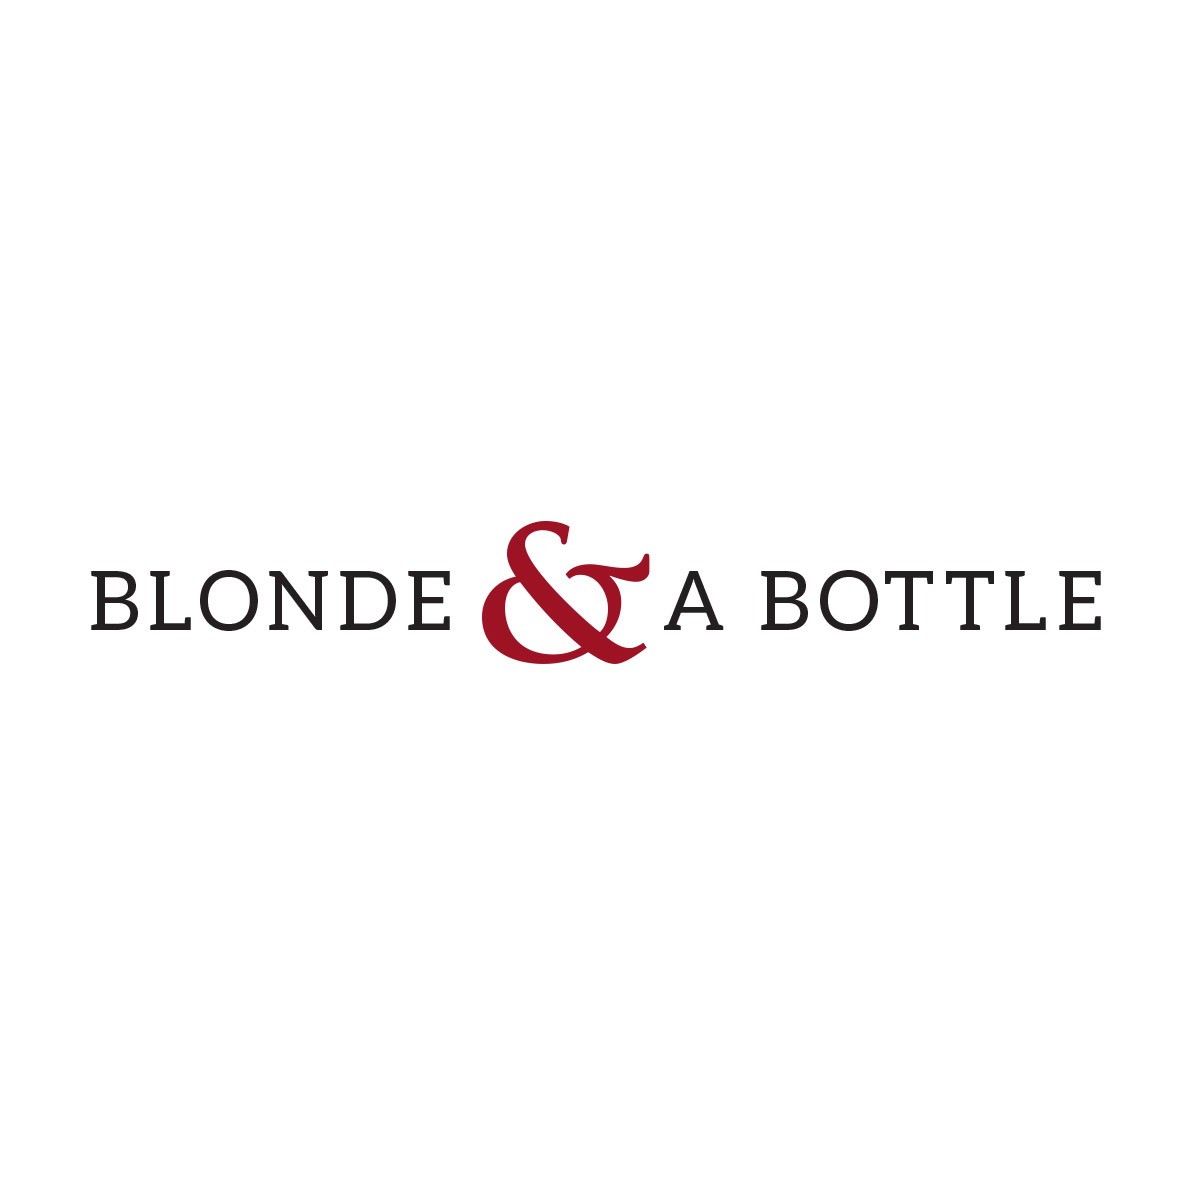 Blonde & A Bottle final concept inline